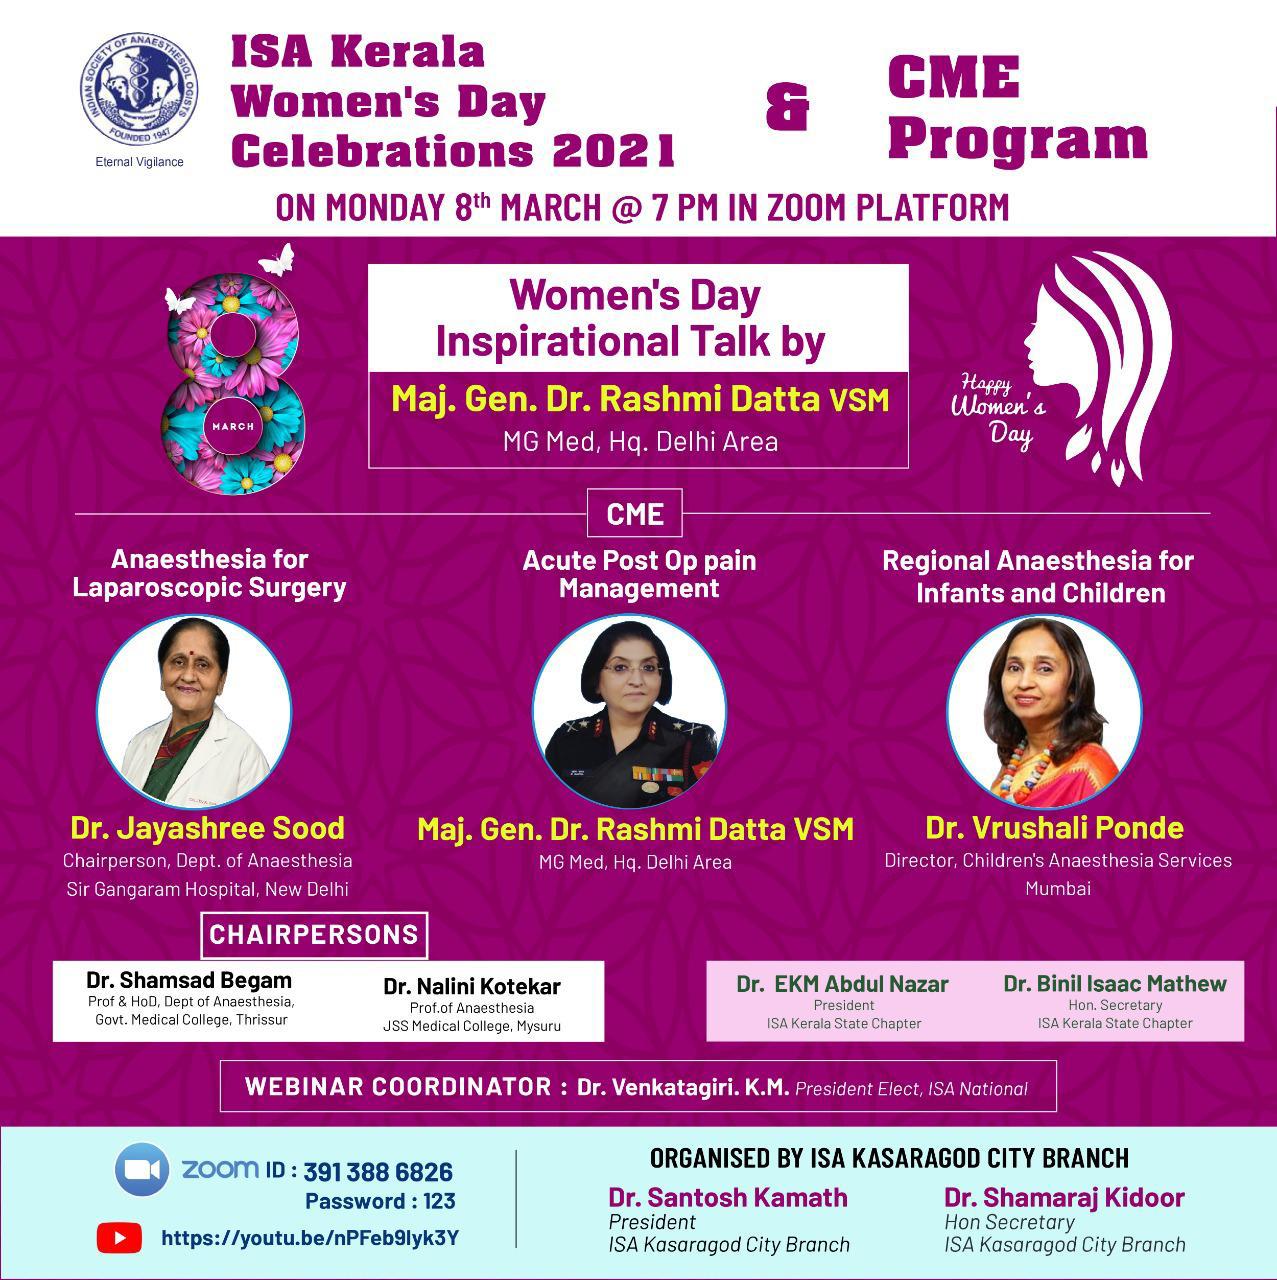  ISA Kerala Women's Day Celebrations and CME Program 2021